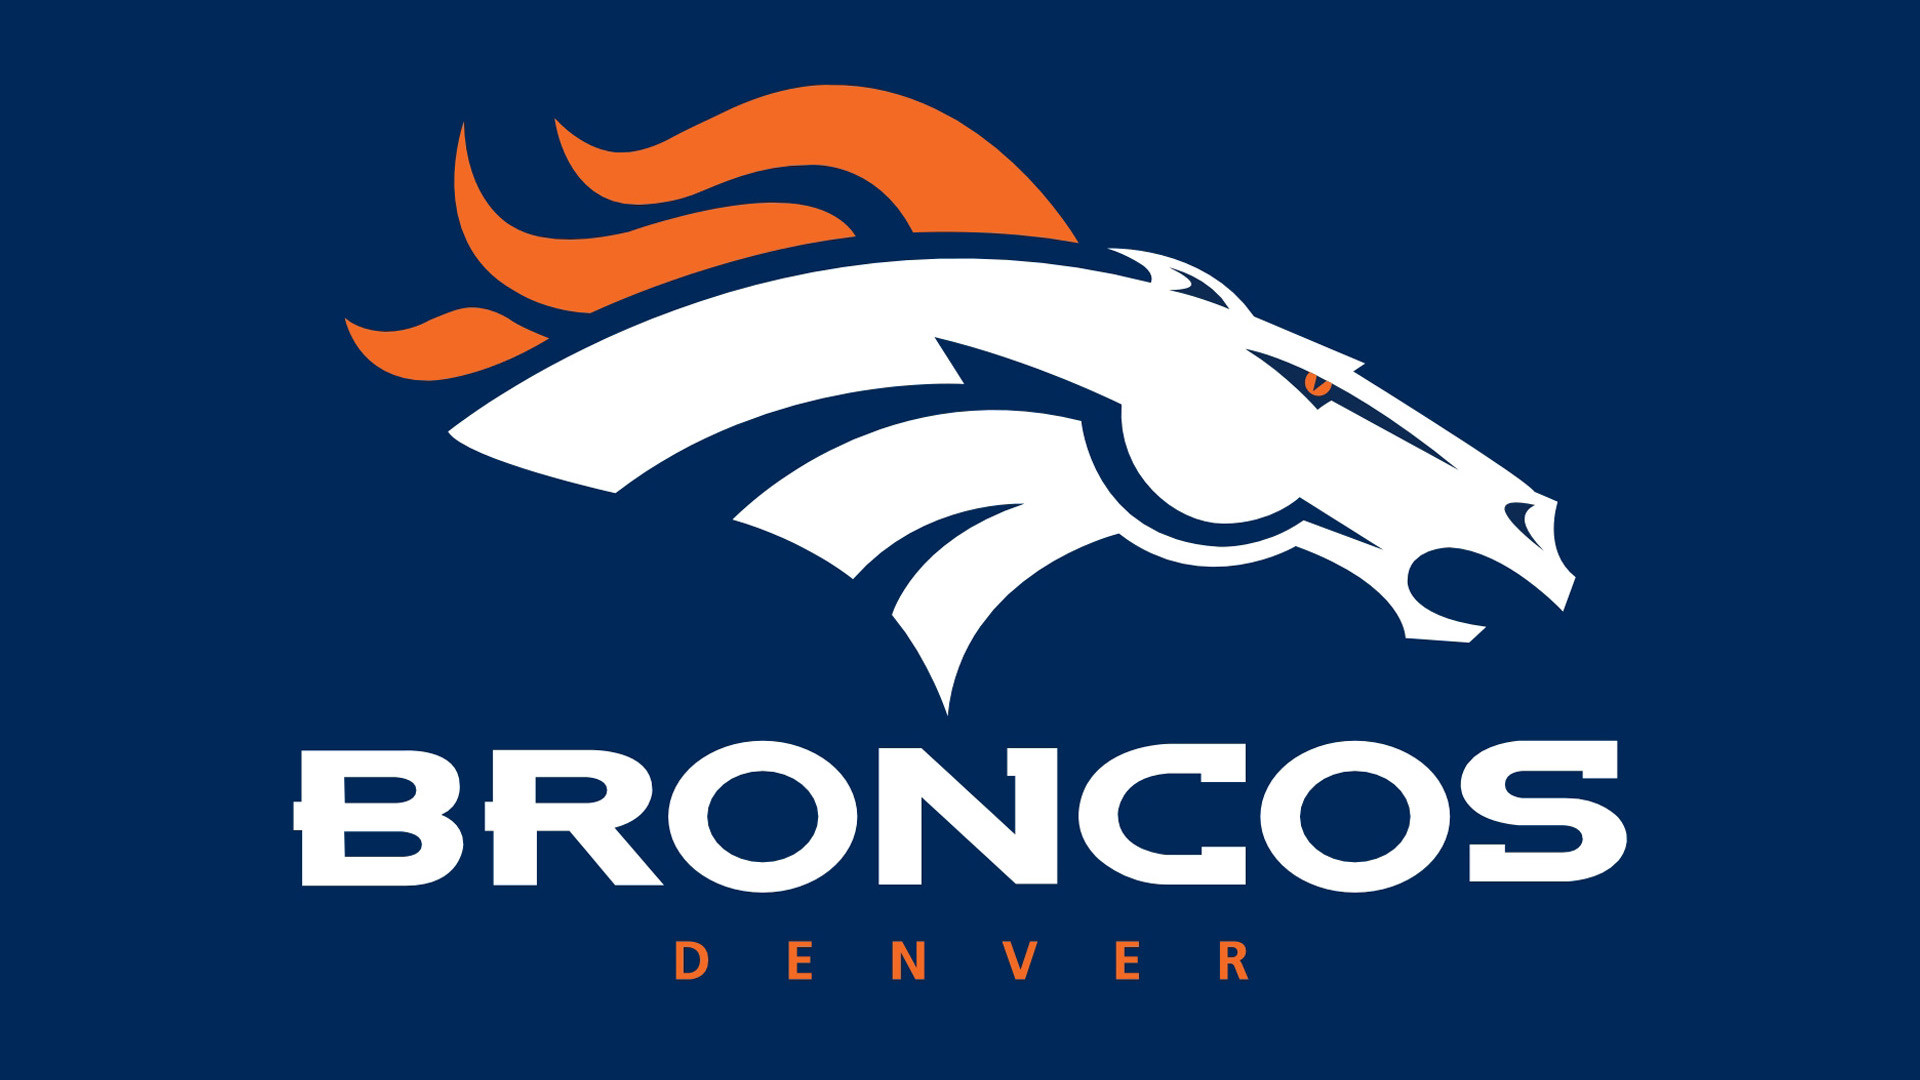 1920x1080 Denver Broncos Horse Logo  HD Image Sports / NFL Football